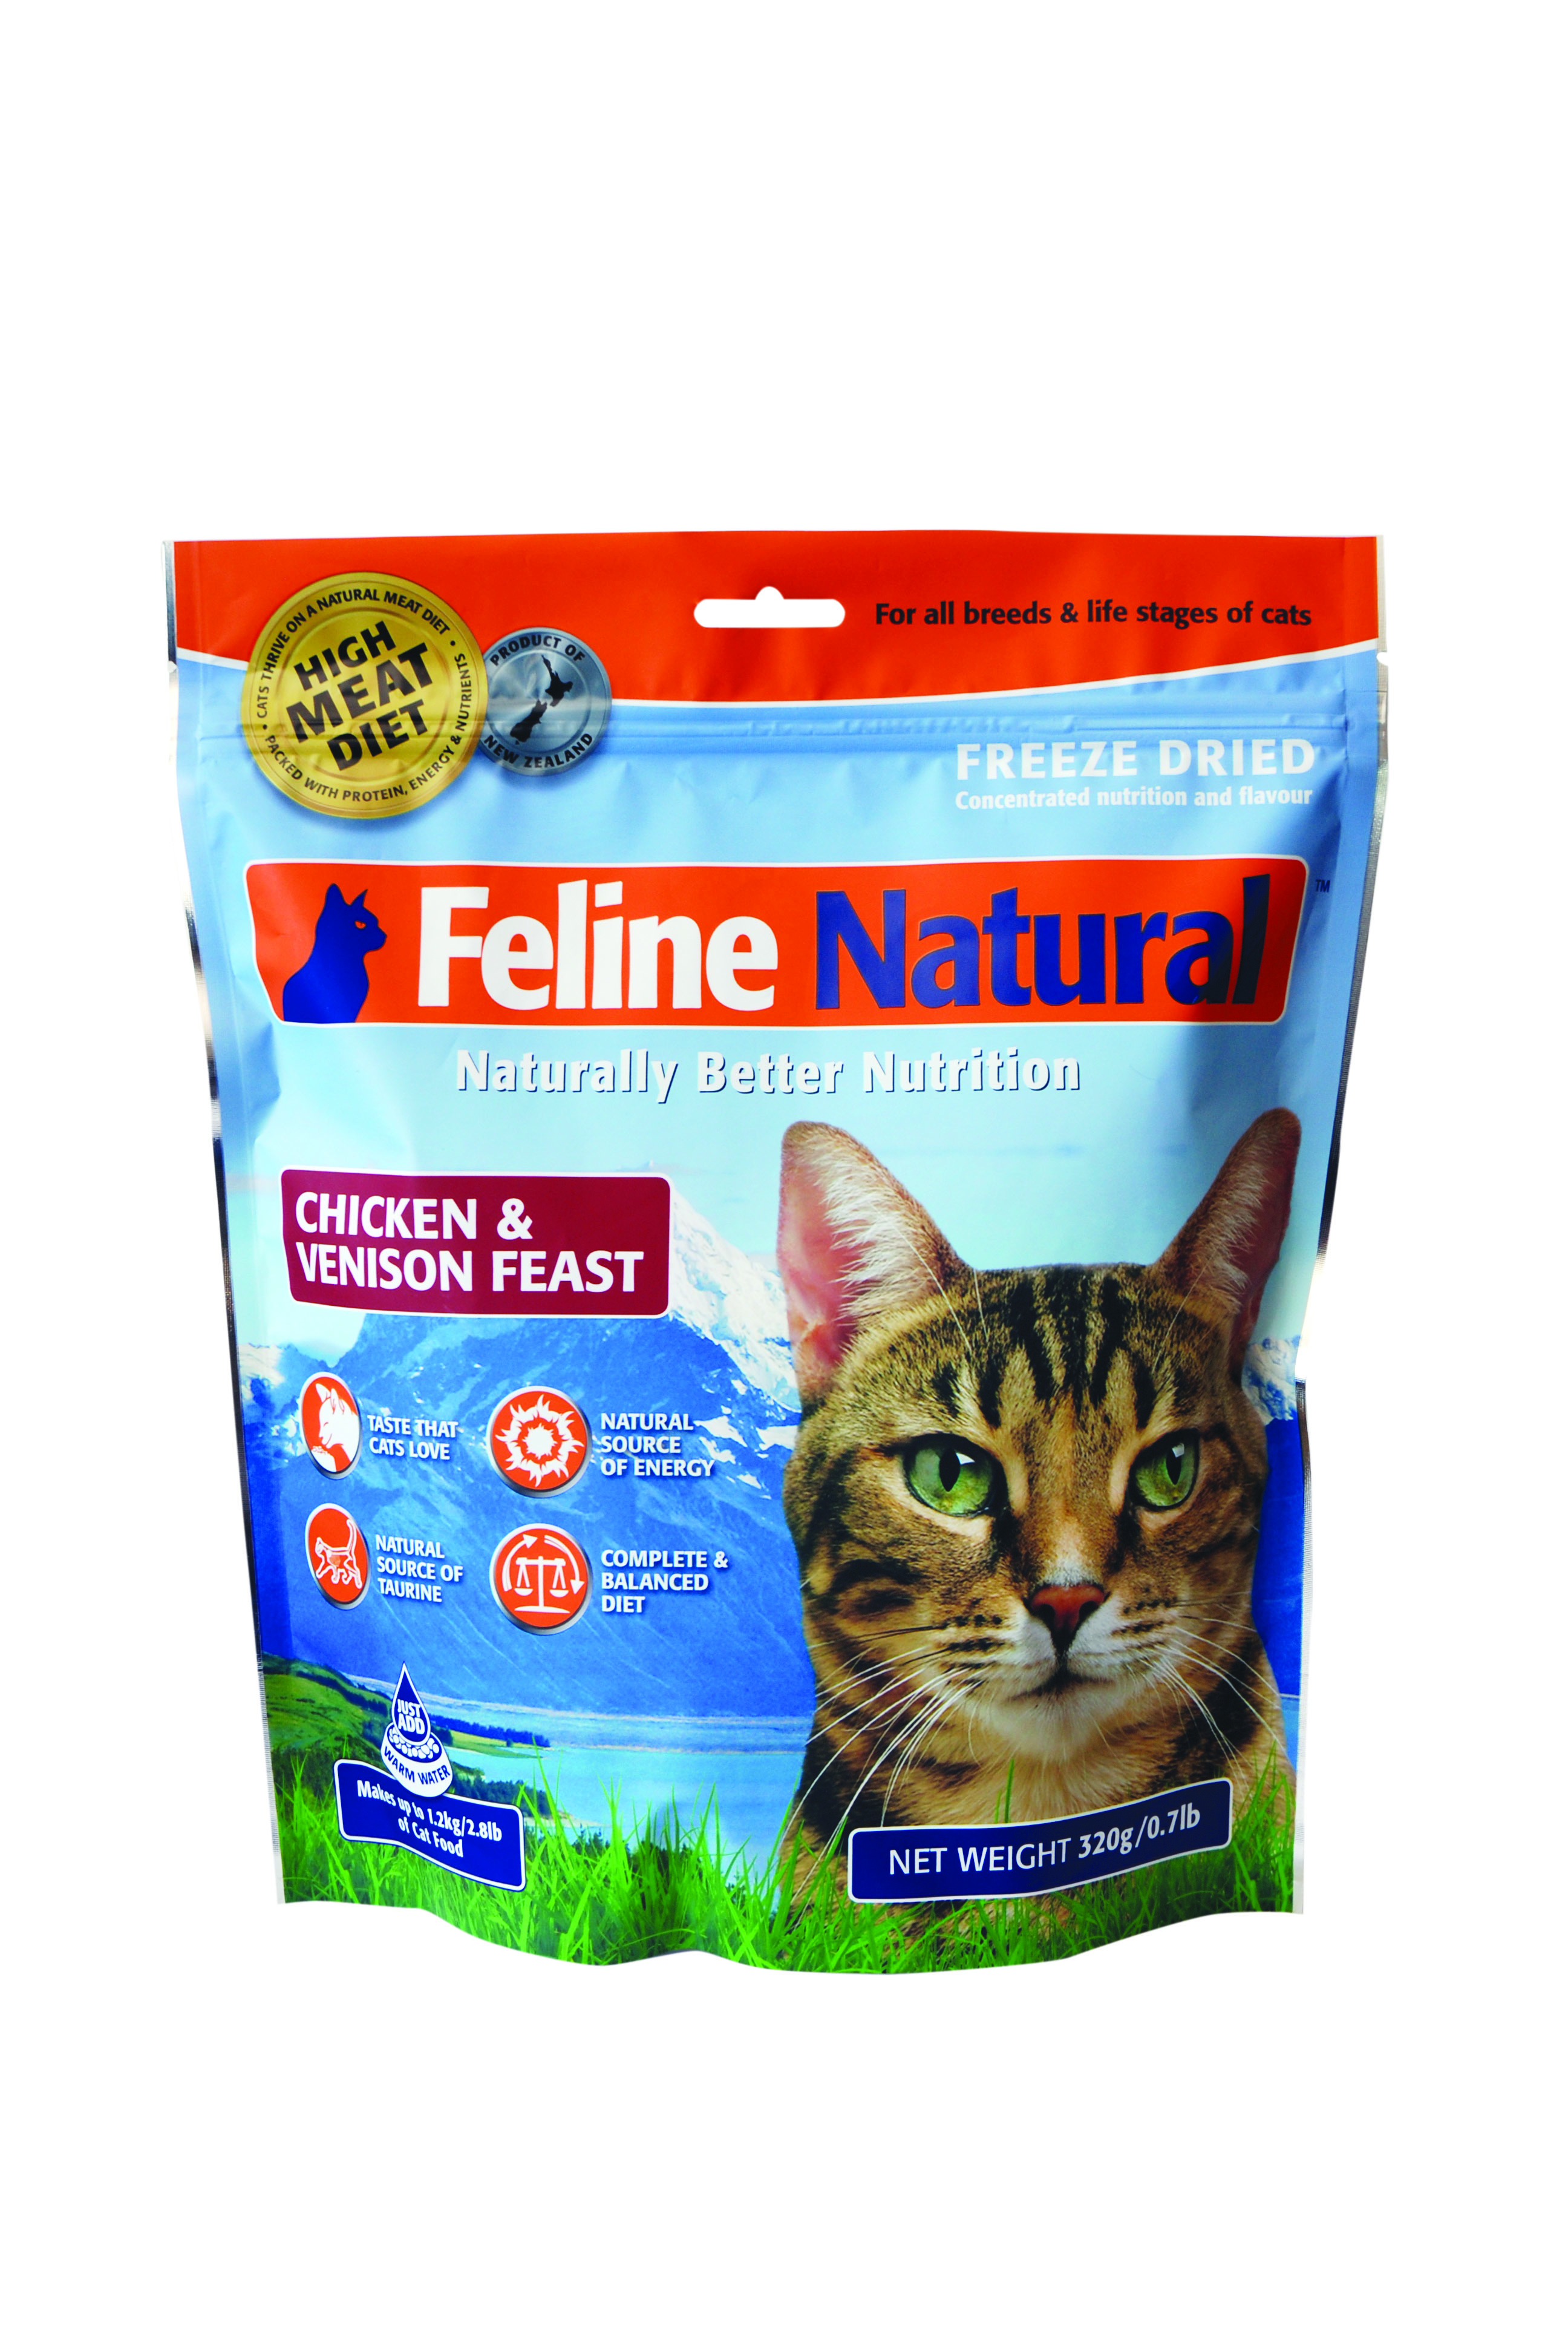 紐西蘭K9 Feline Natural 冷凍乾燥鮮肉生食餐　95% 雞肉+鹿肉
Feline Natural Chicken & Venison Delight: Freeze Dried